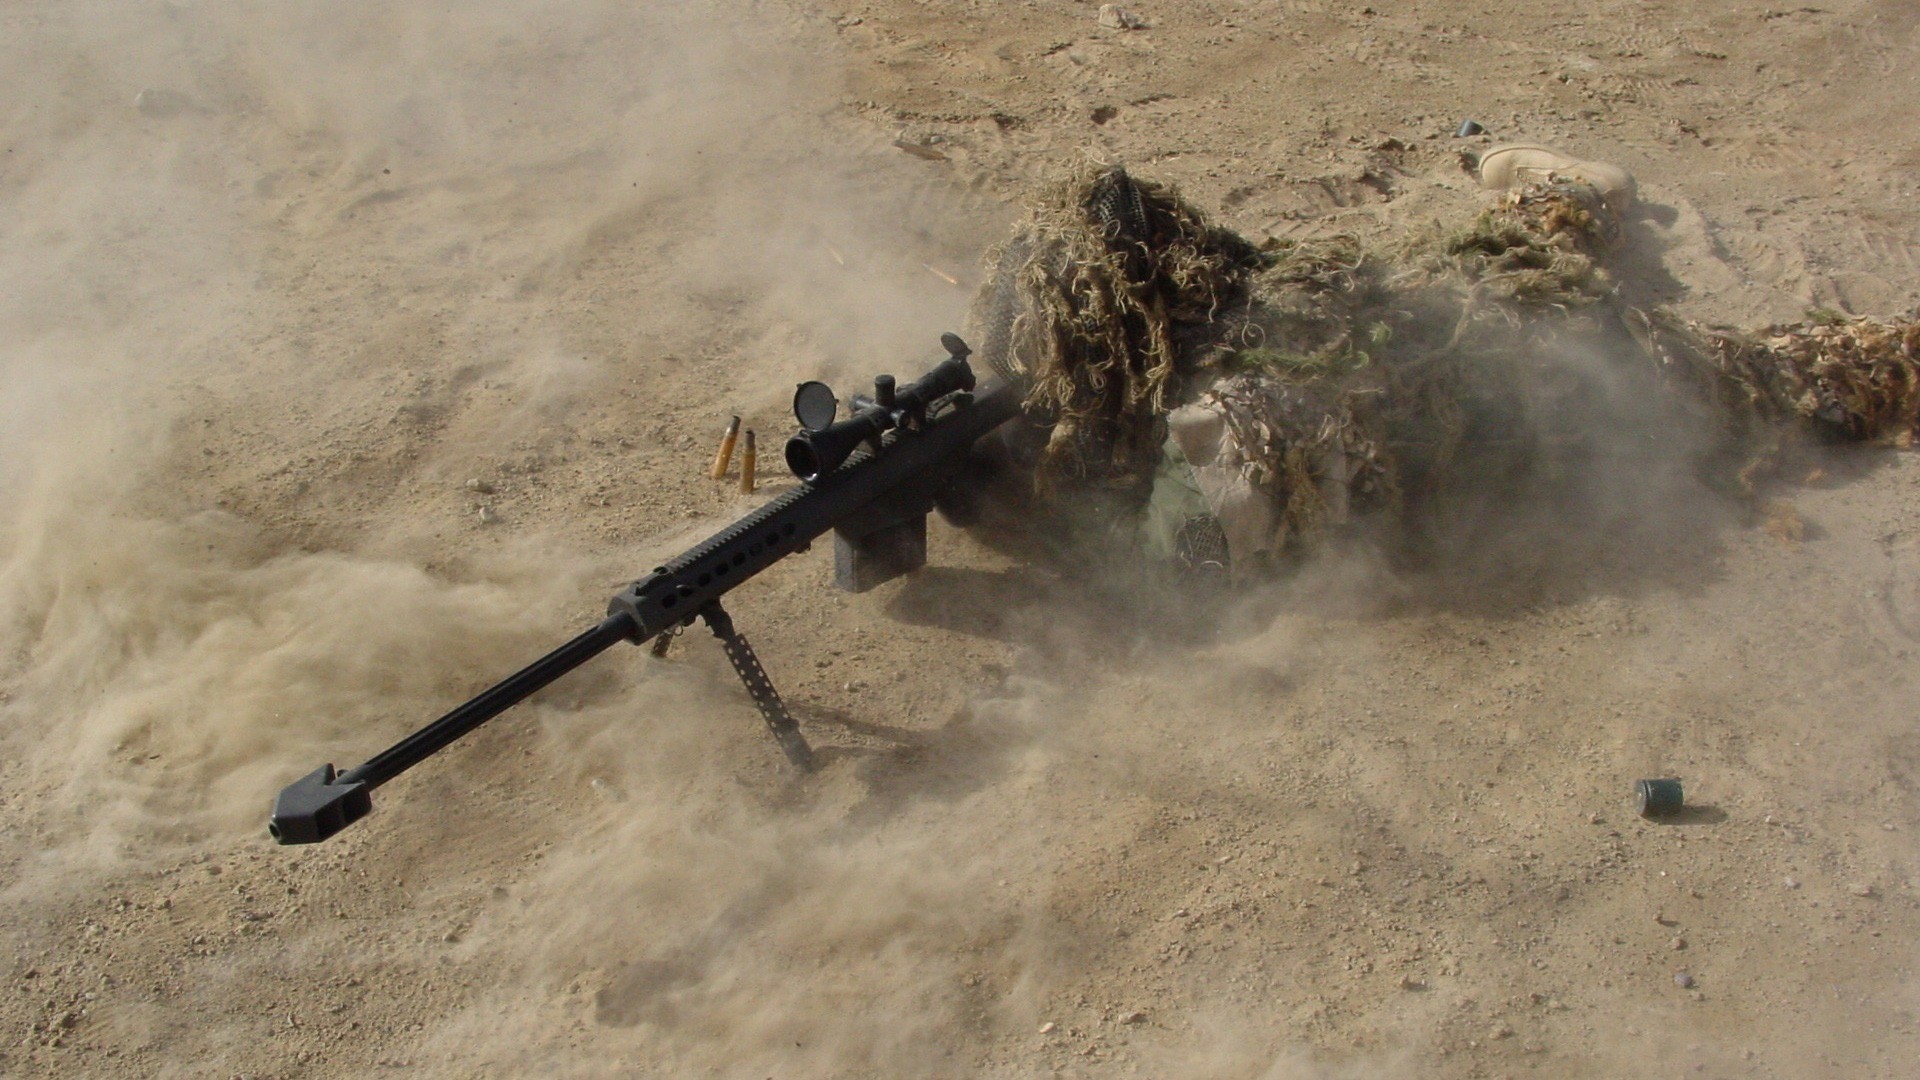 1920x1080 Sniper Camouflage Wallpaper  Sniper Camouflage Barrett 